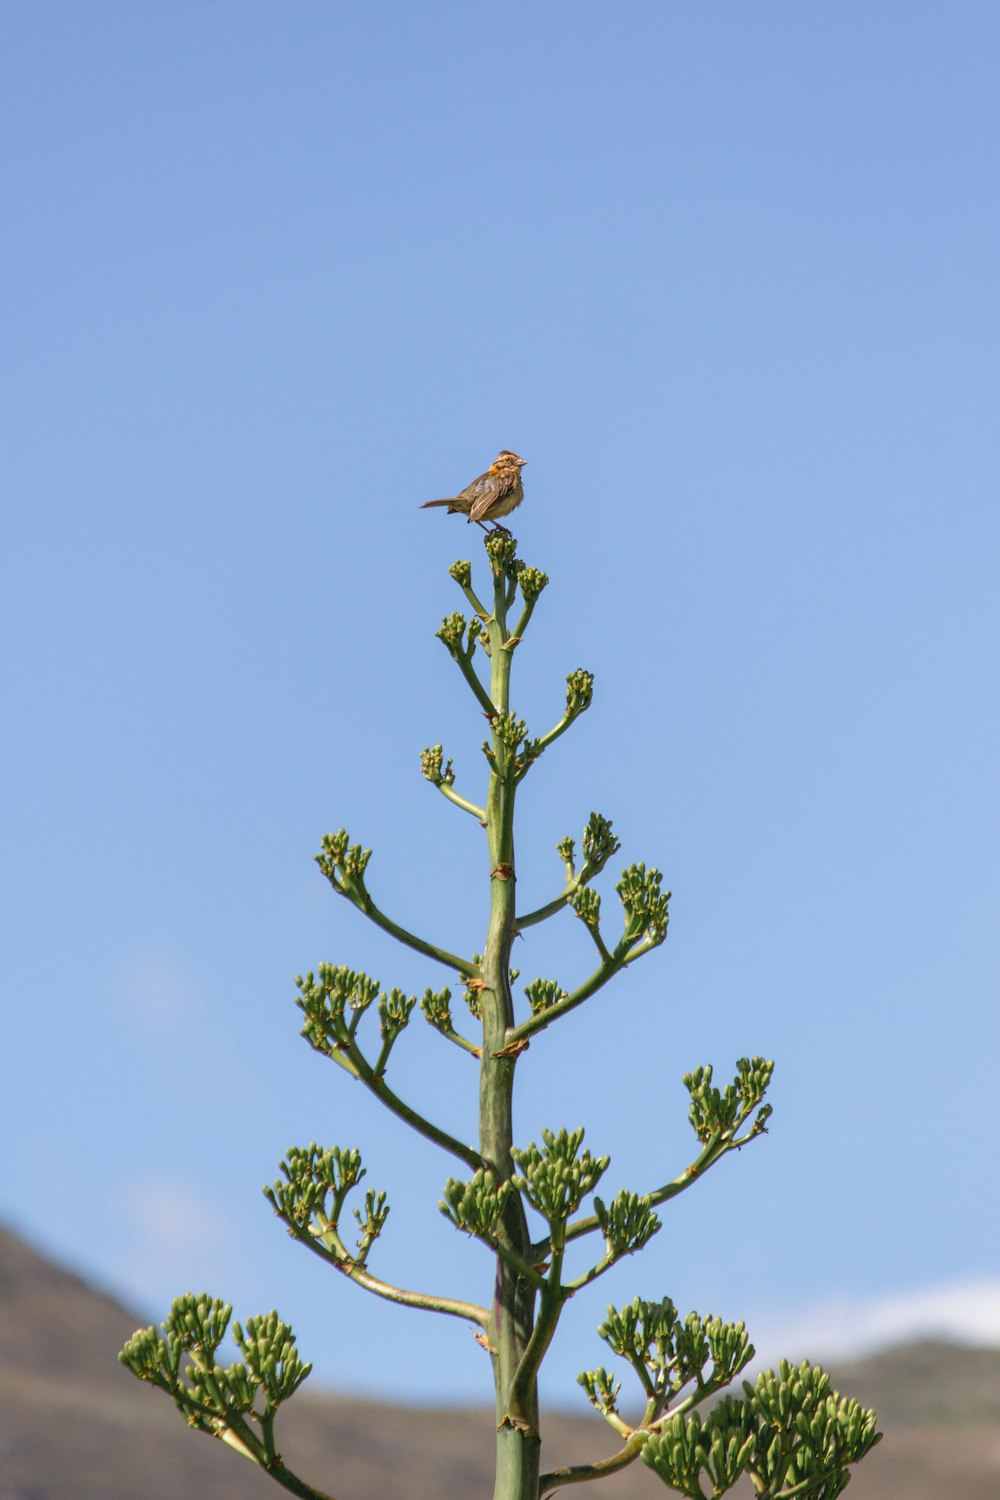 bird standing on tree